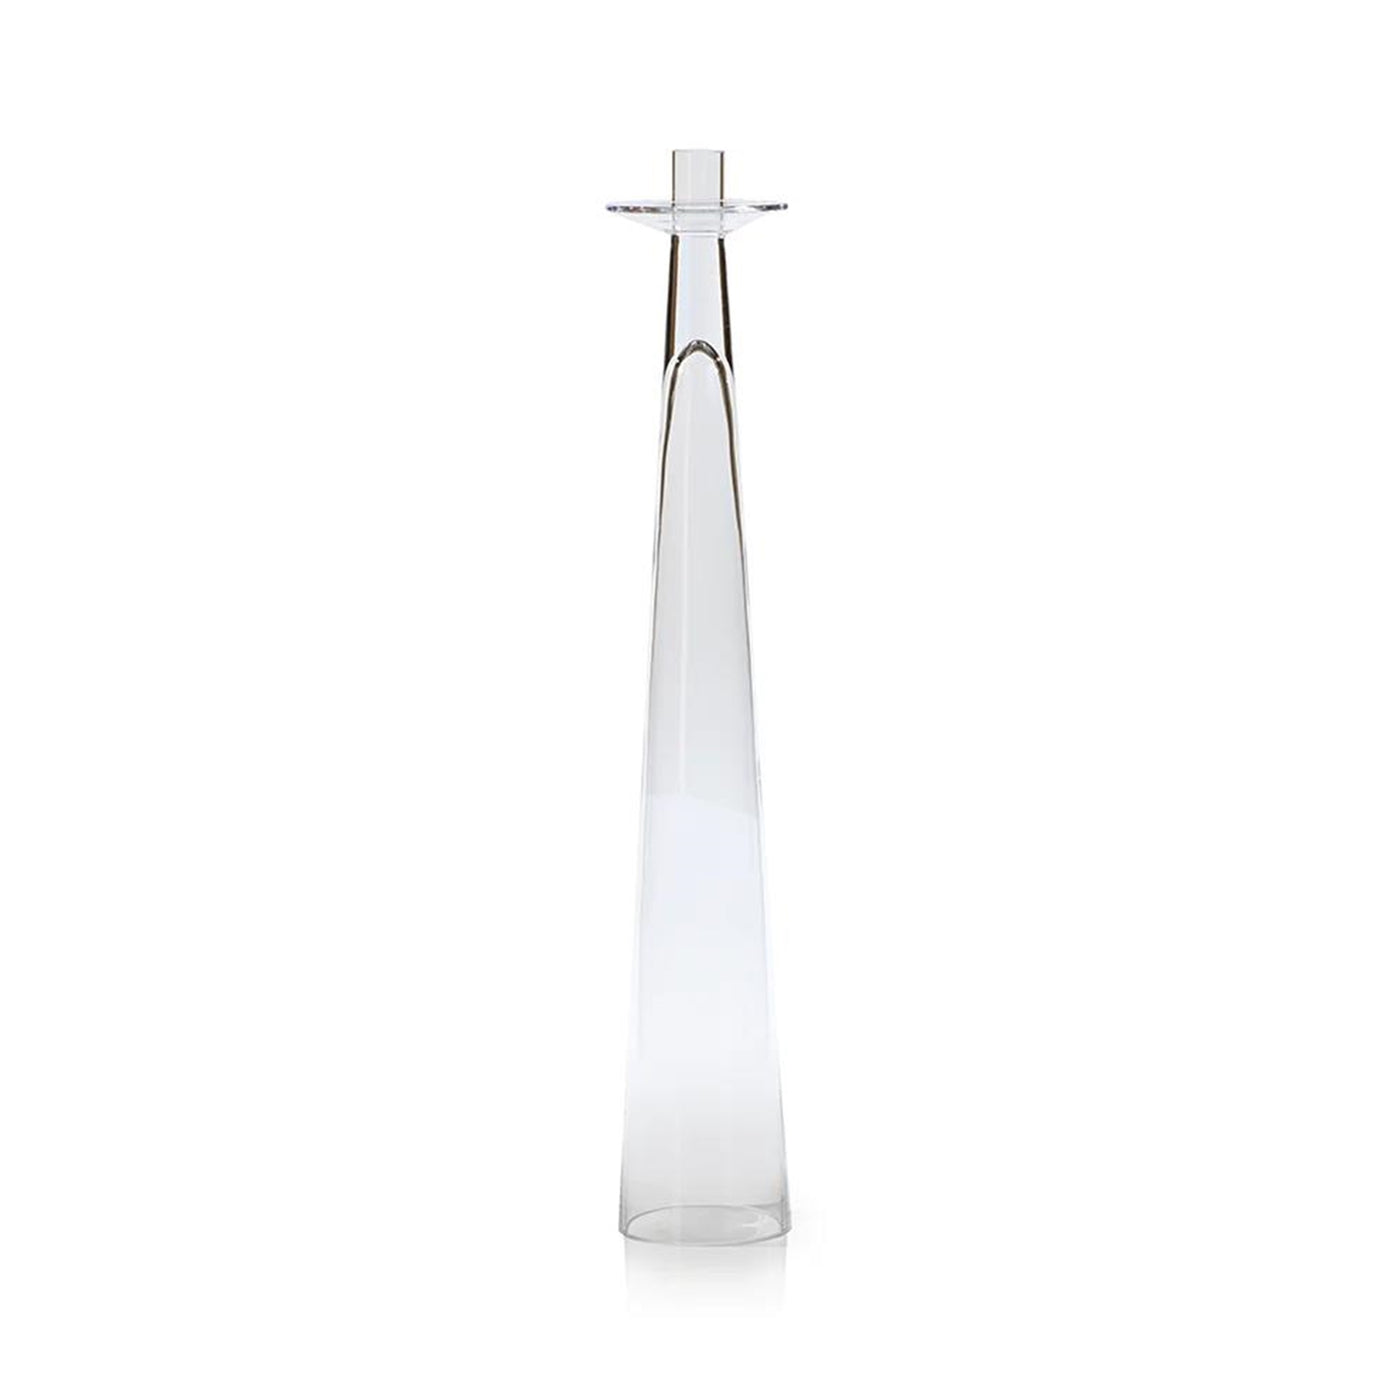 Amin Glass Candleholder - Large - 19.75"  Cannot ship